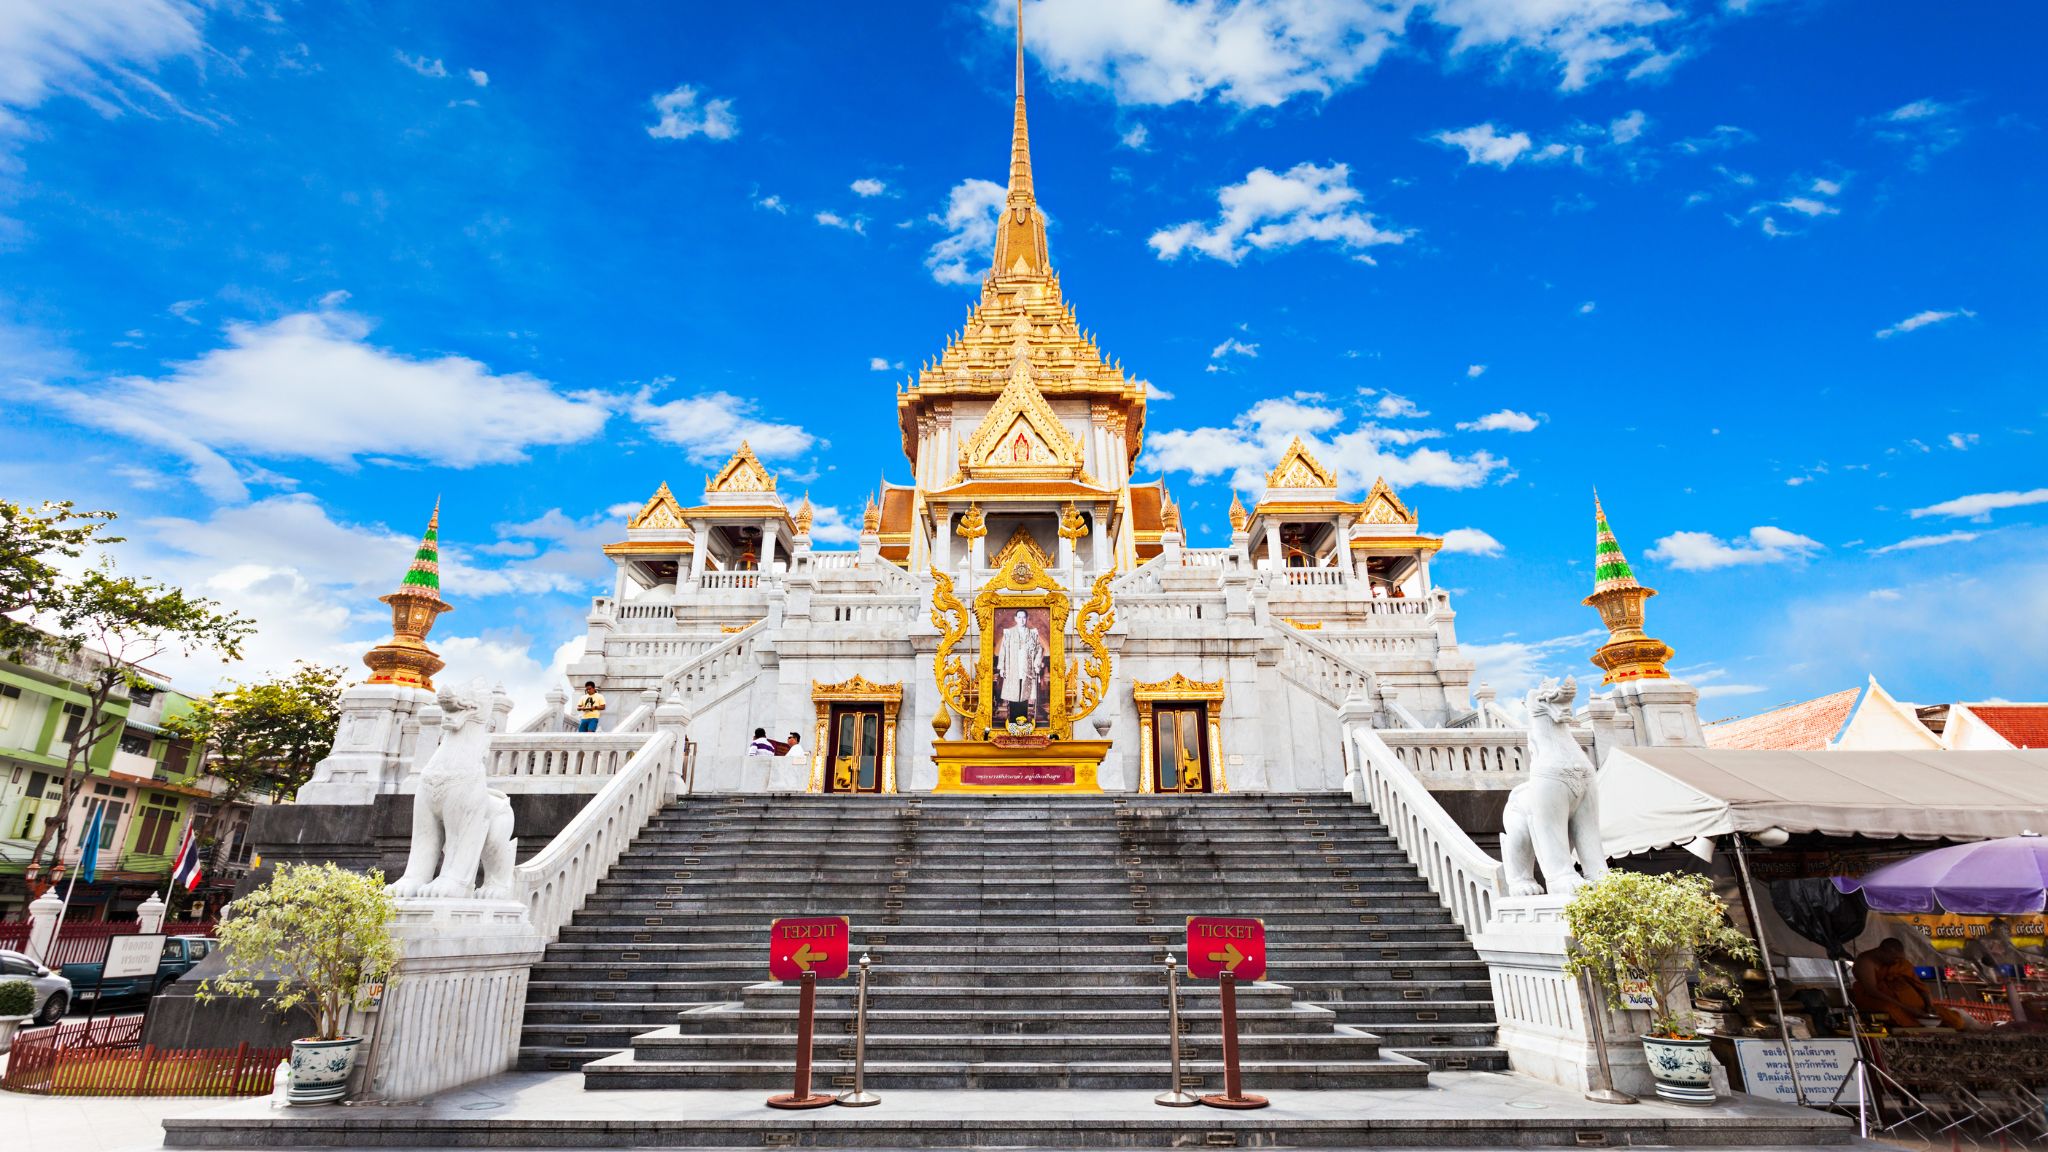 Day 2 Explore The Golden Colour Of Wat Traimit